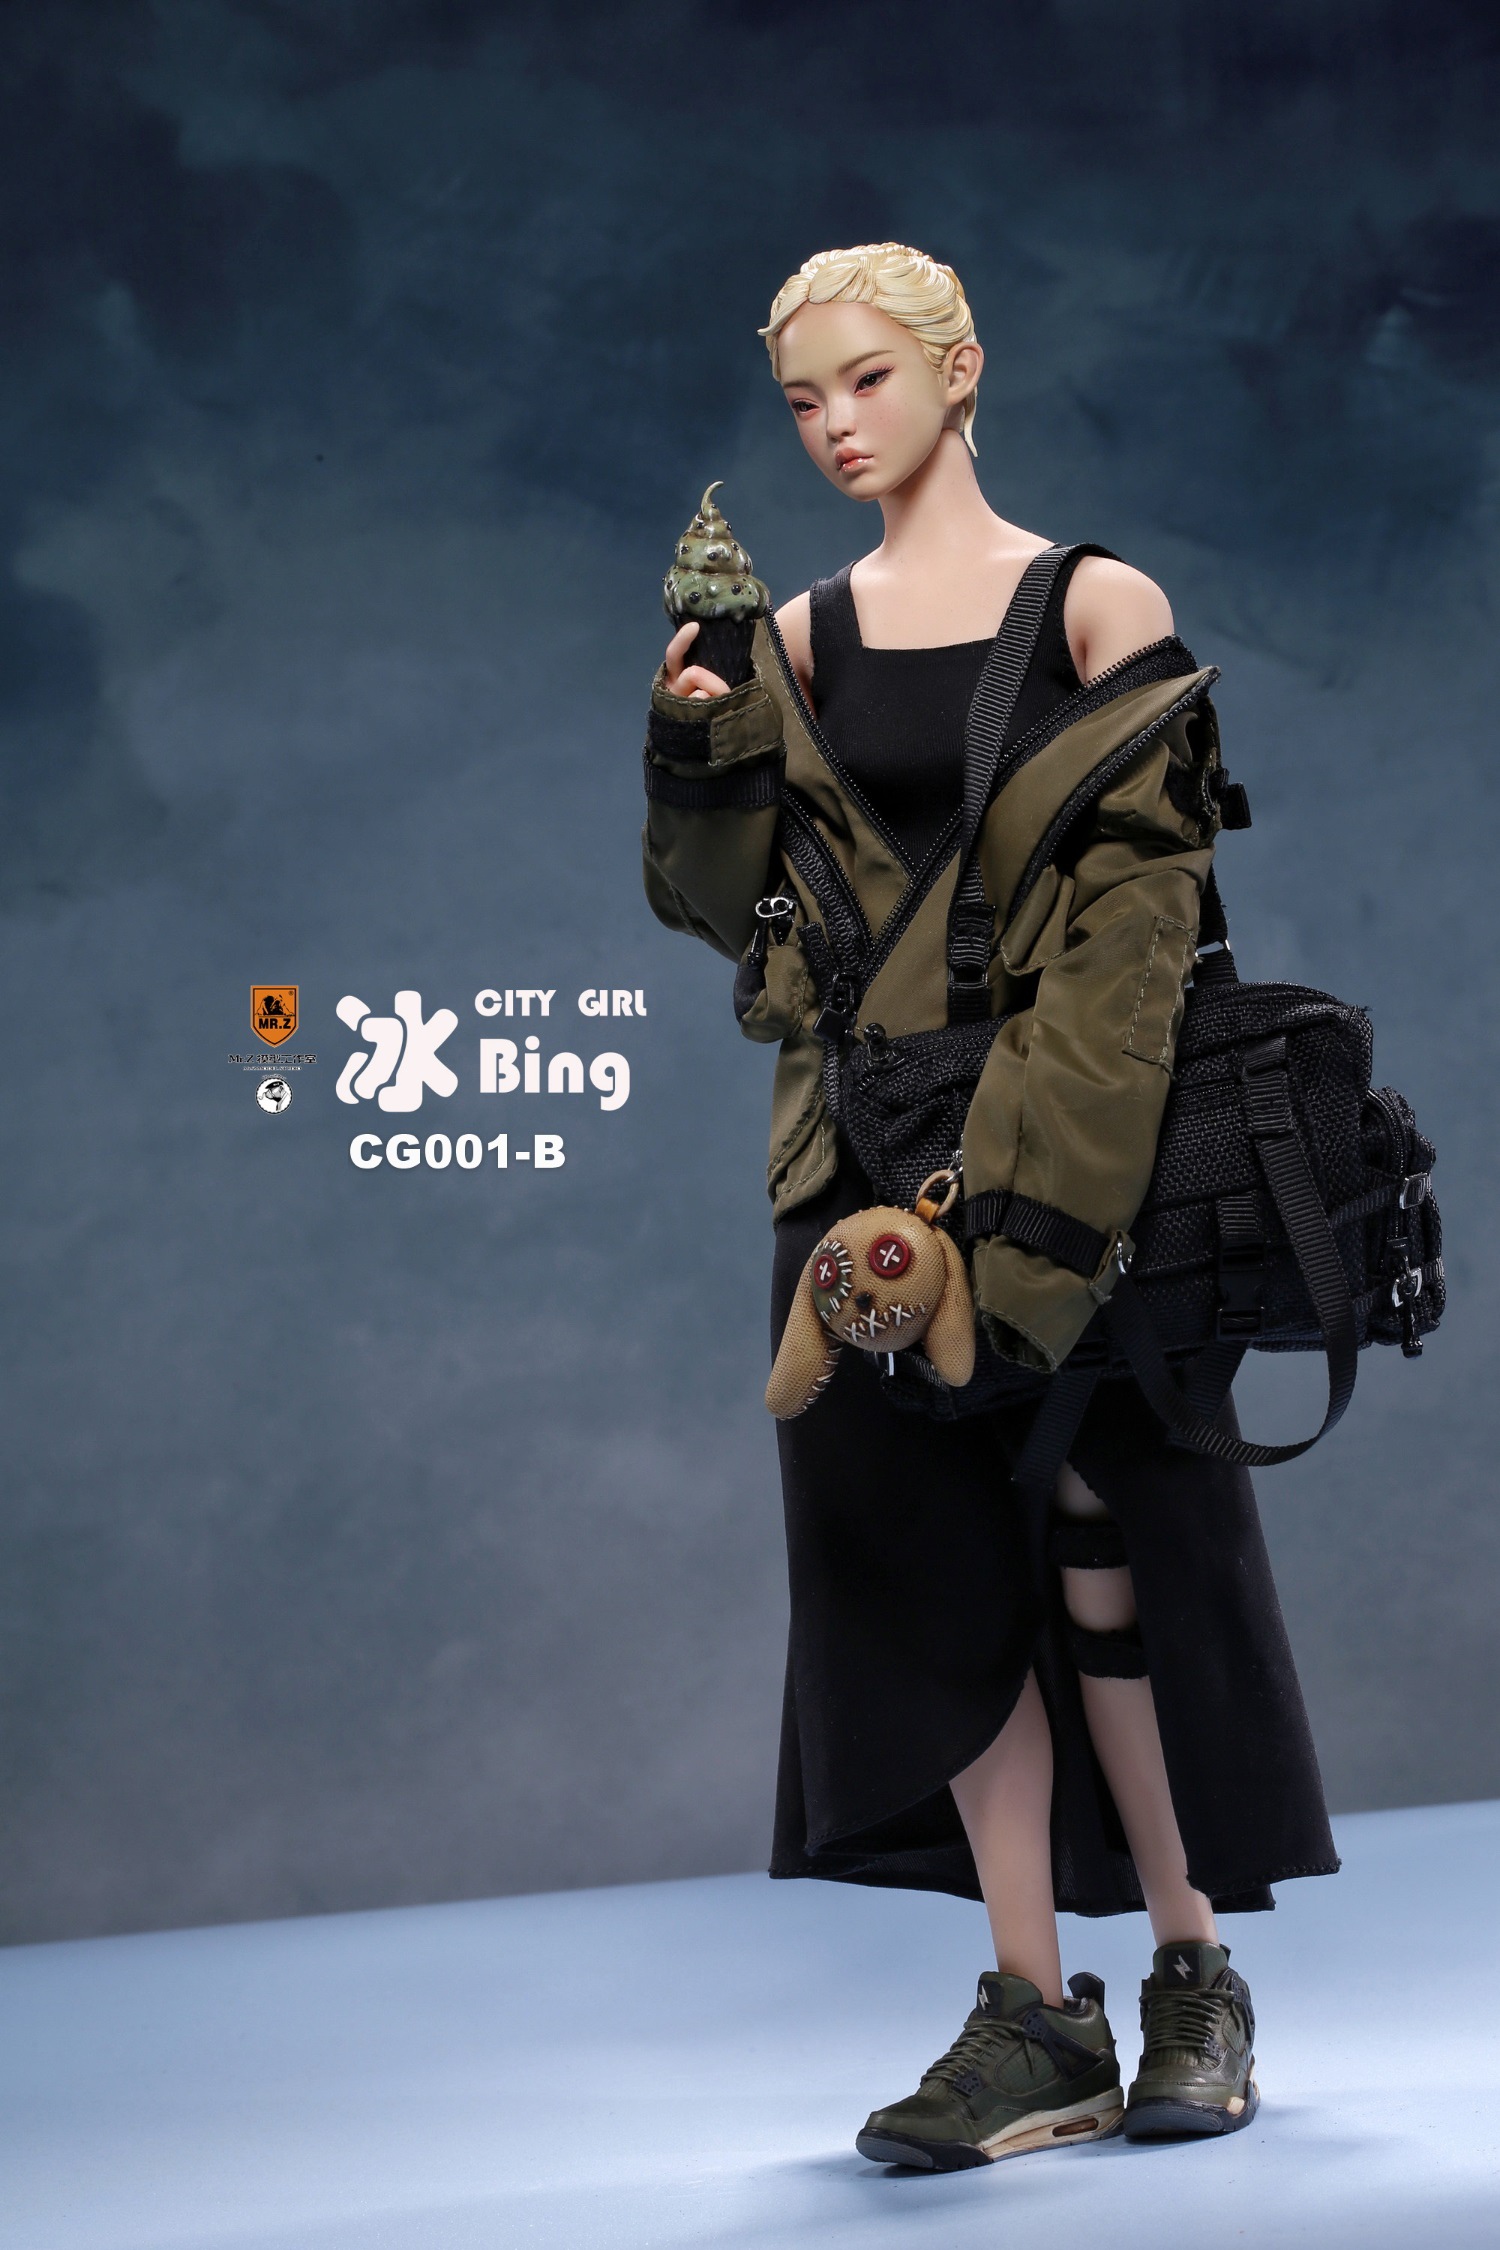 female - NEW PRODUCT: Mr.Z model studio - city series first urban girl Mu & Bing #CG001-A/B 04125